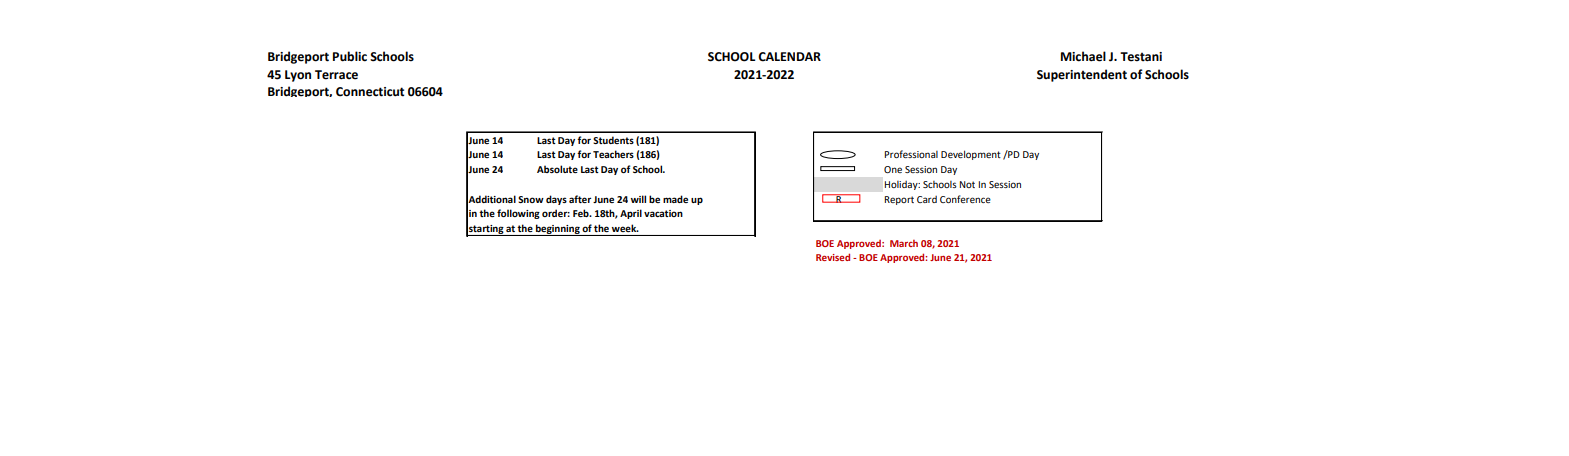 District School Academic Calendar Key for Howe School